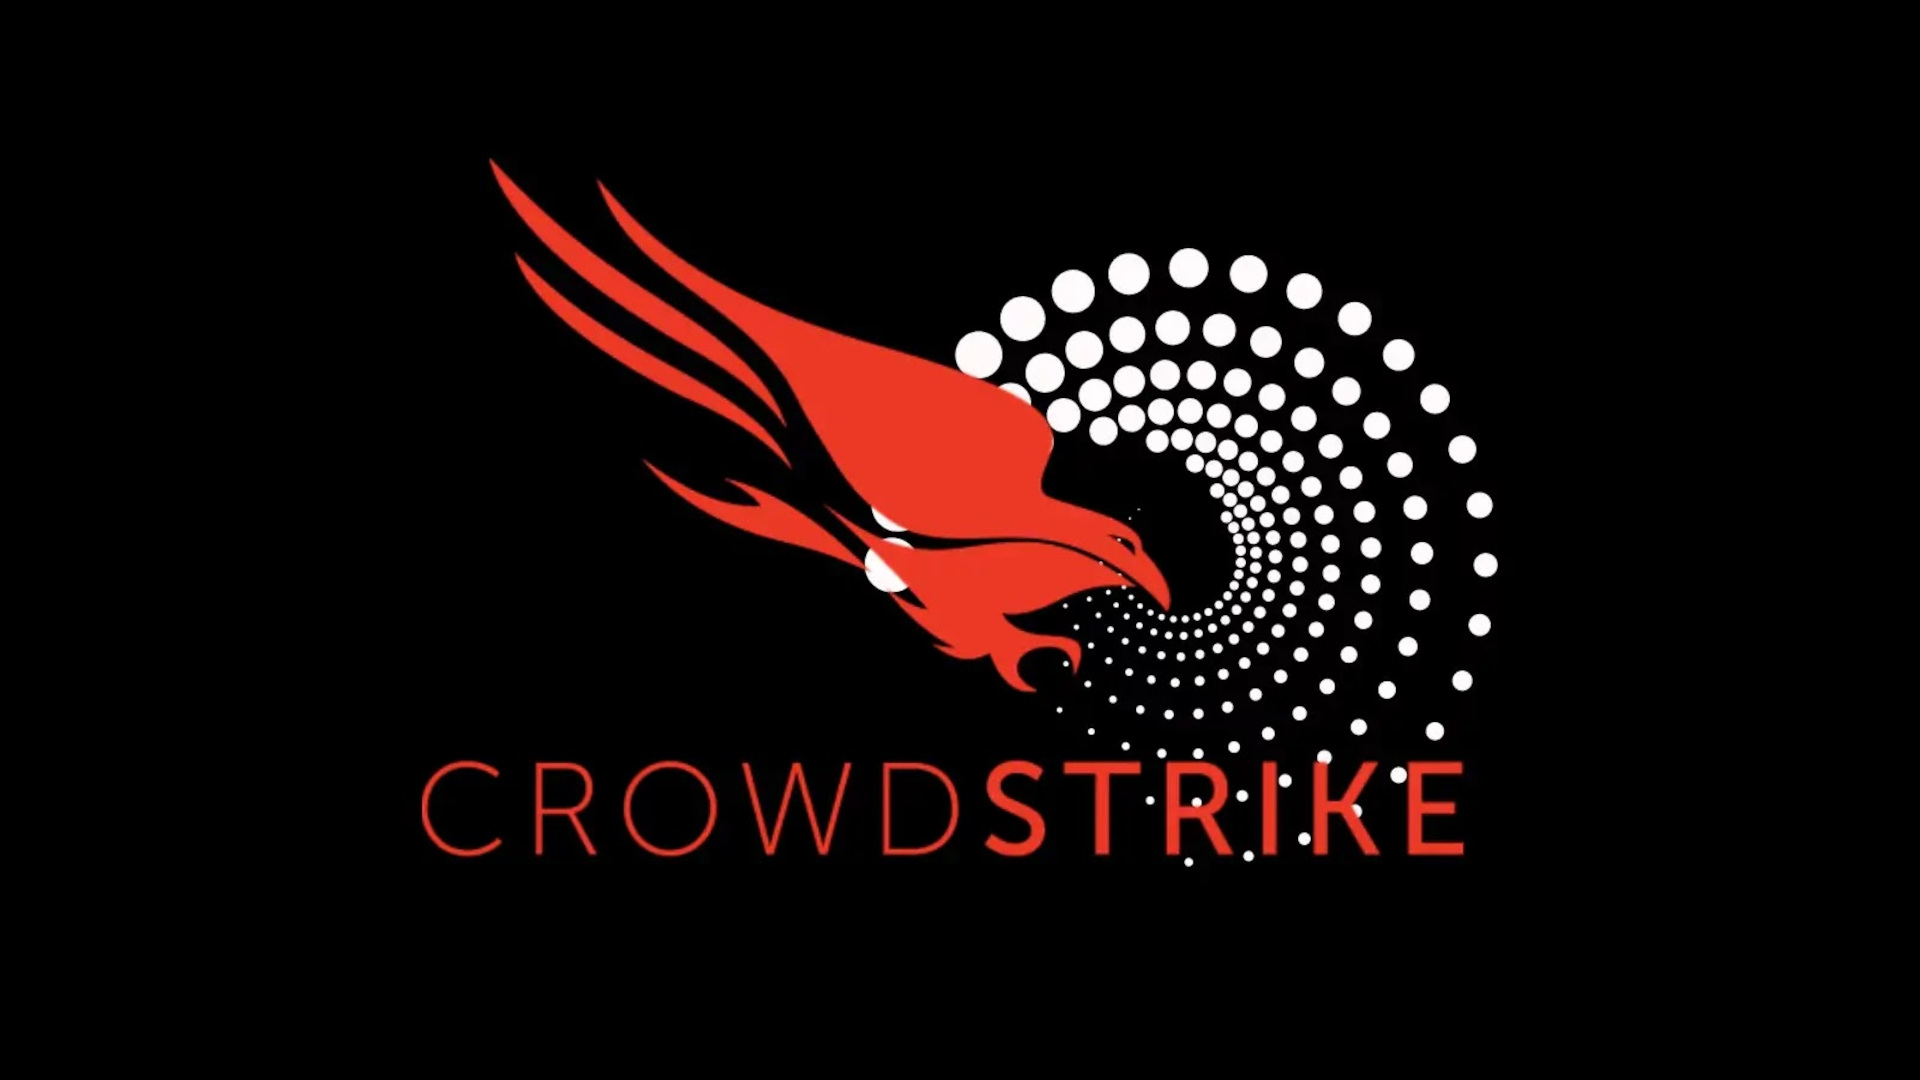 CrowdStrike Bug Causes Major System Disruptions - Analysis and Response